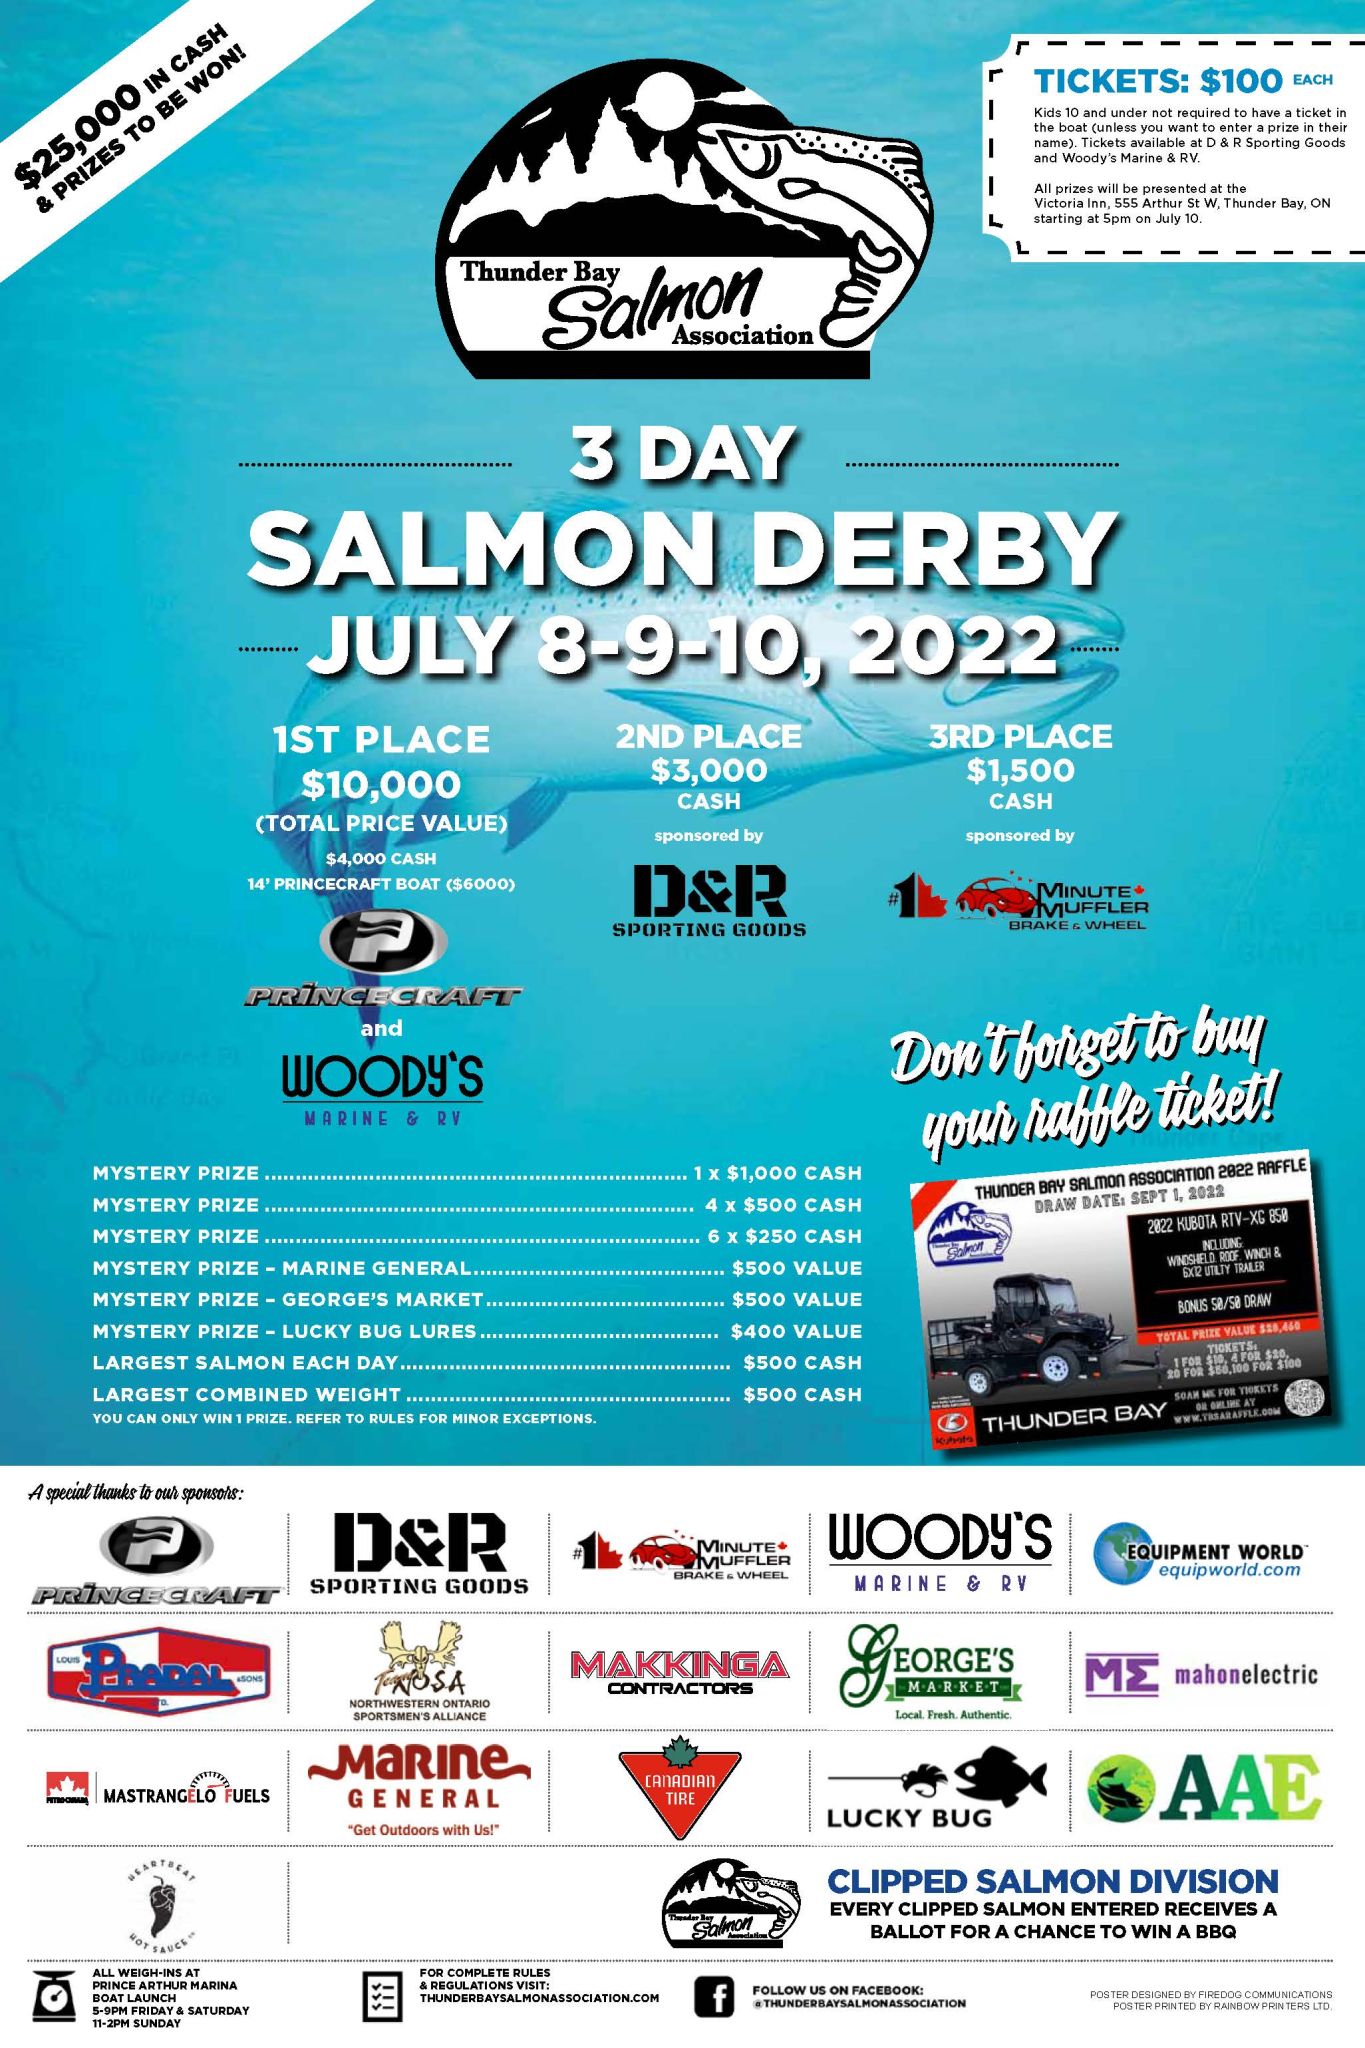 Salmon Derby 2022 Salmon Association